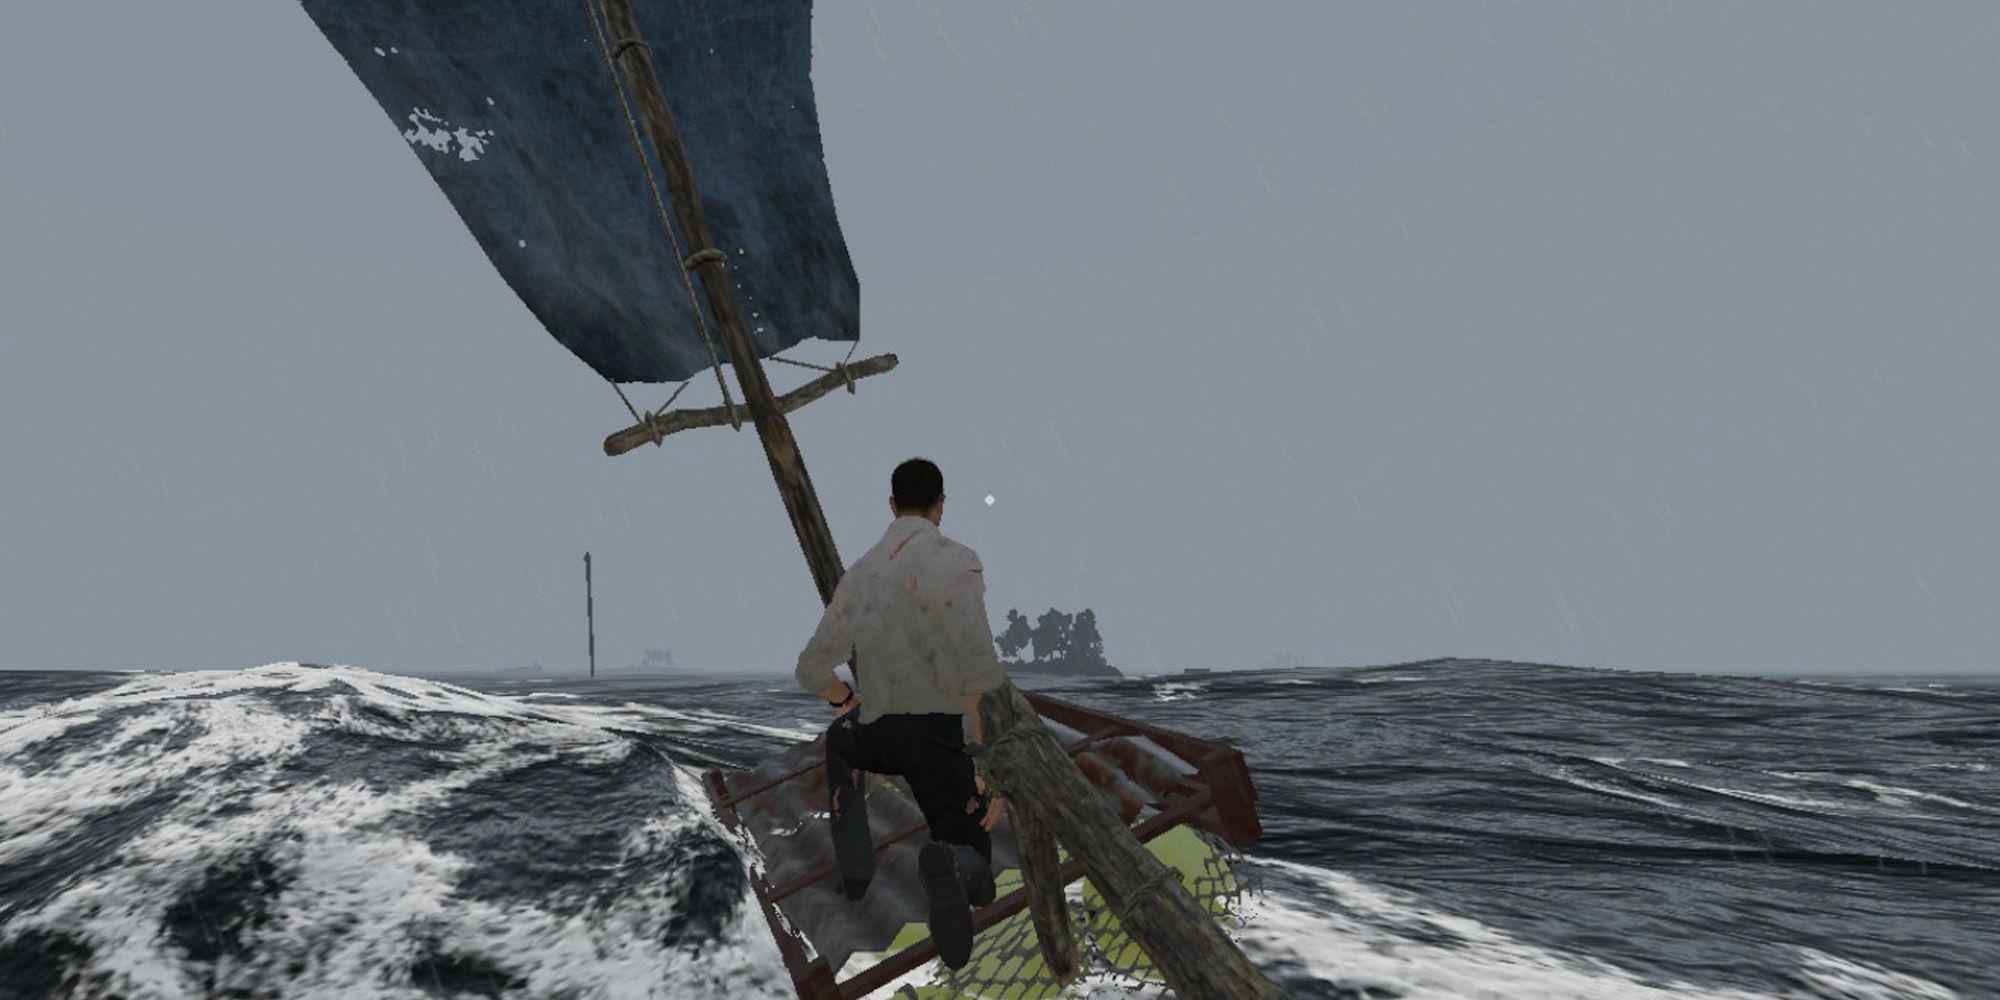 sail raft in stranded deep